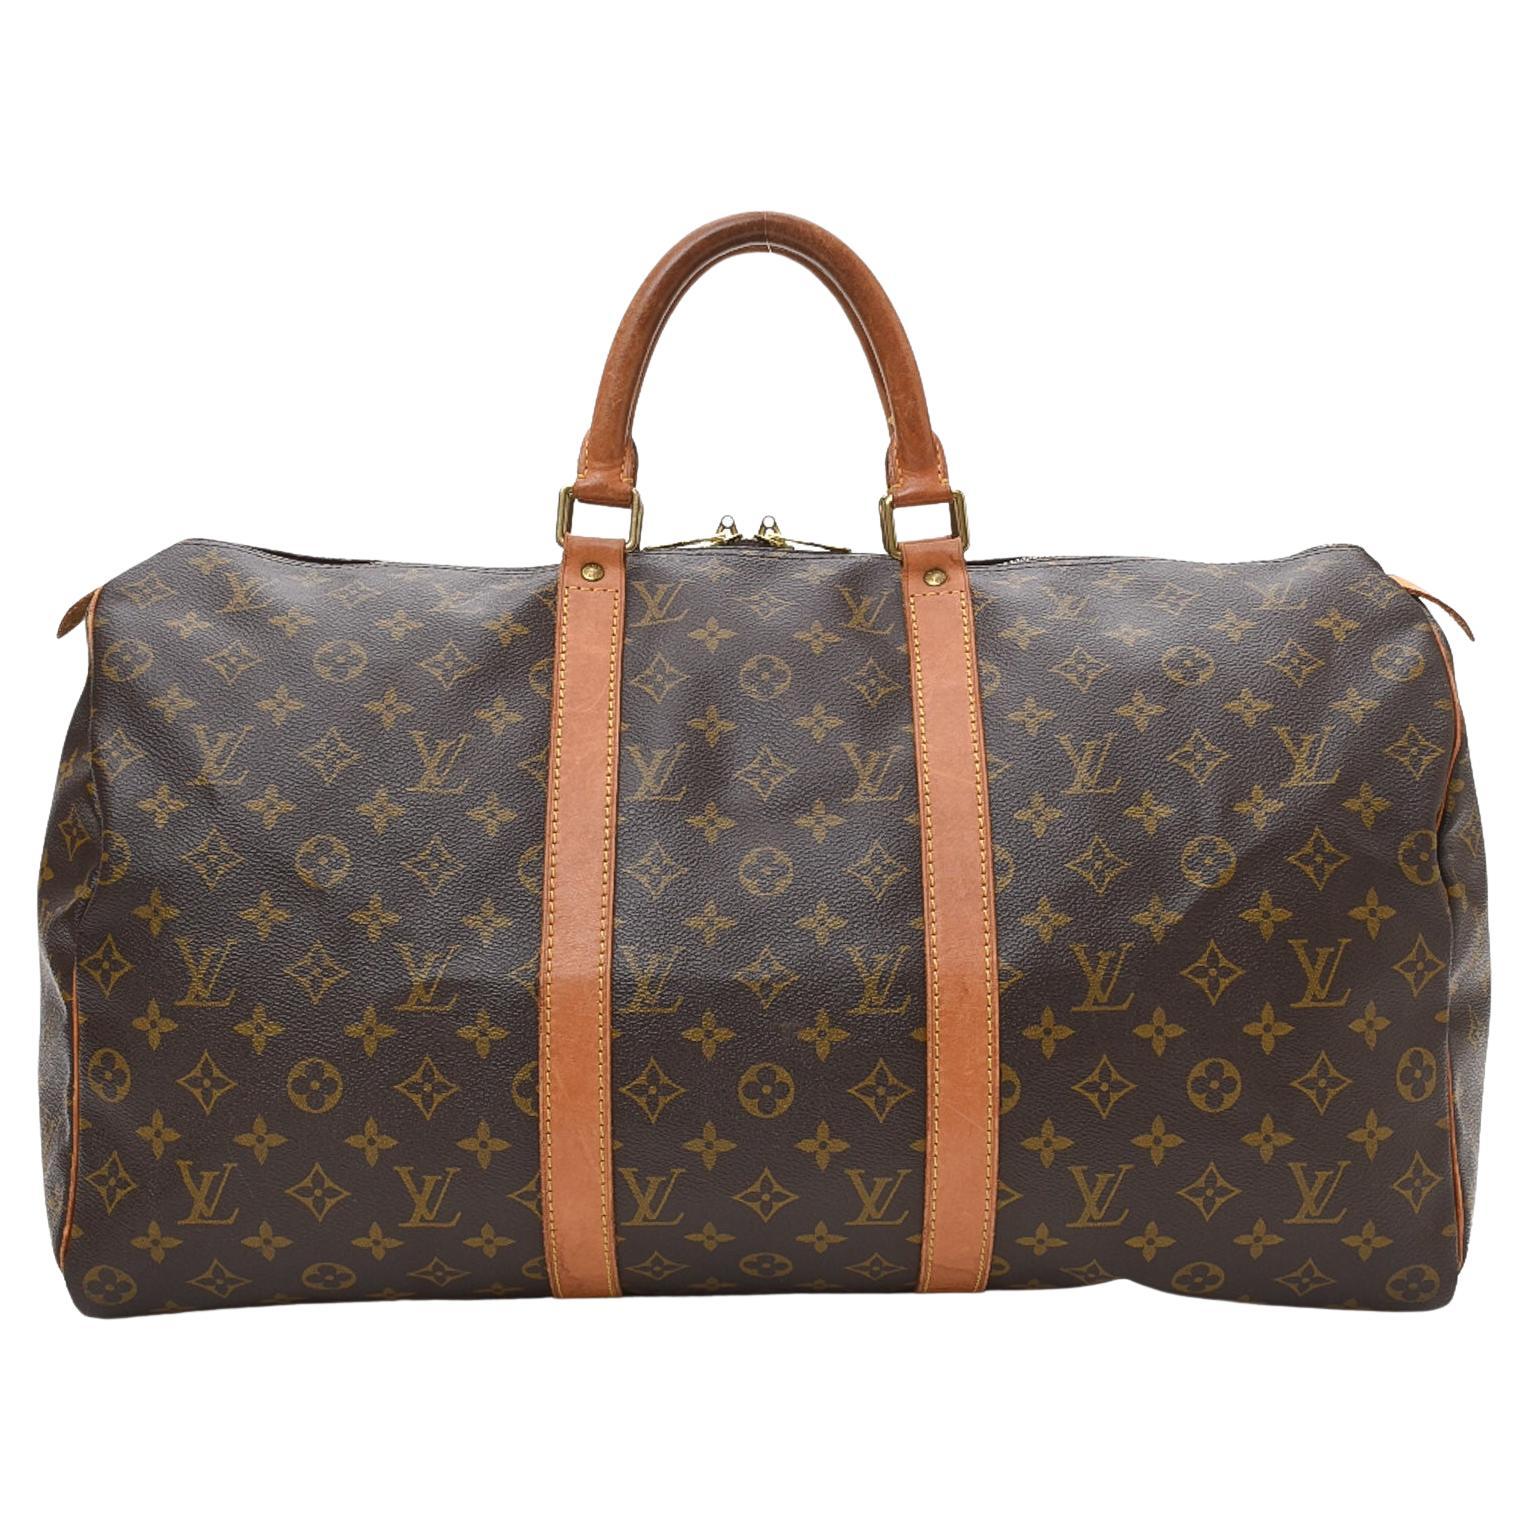 Louis Vuitton Brown Monogram Canvas Leather Keepall 50 cm Duffle Bag Luggage